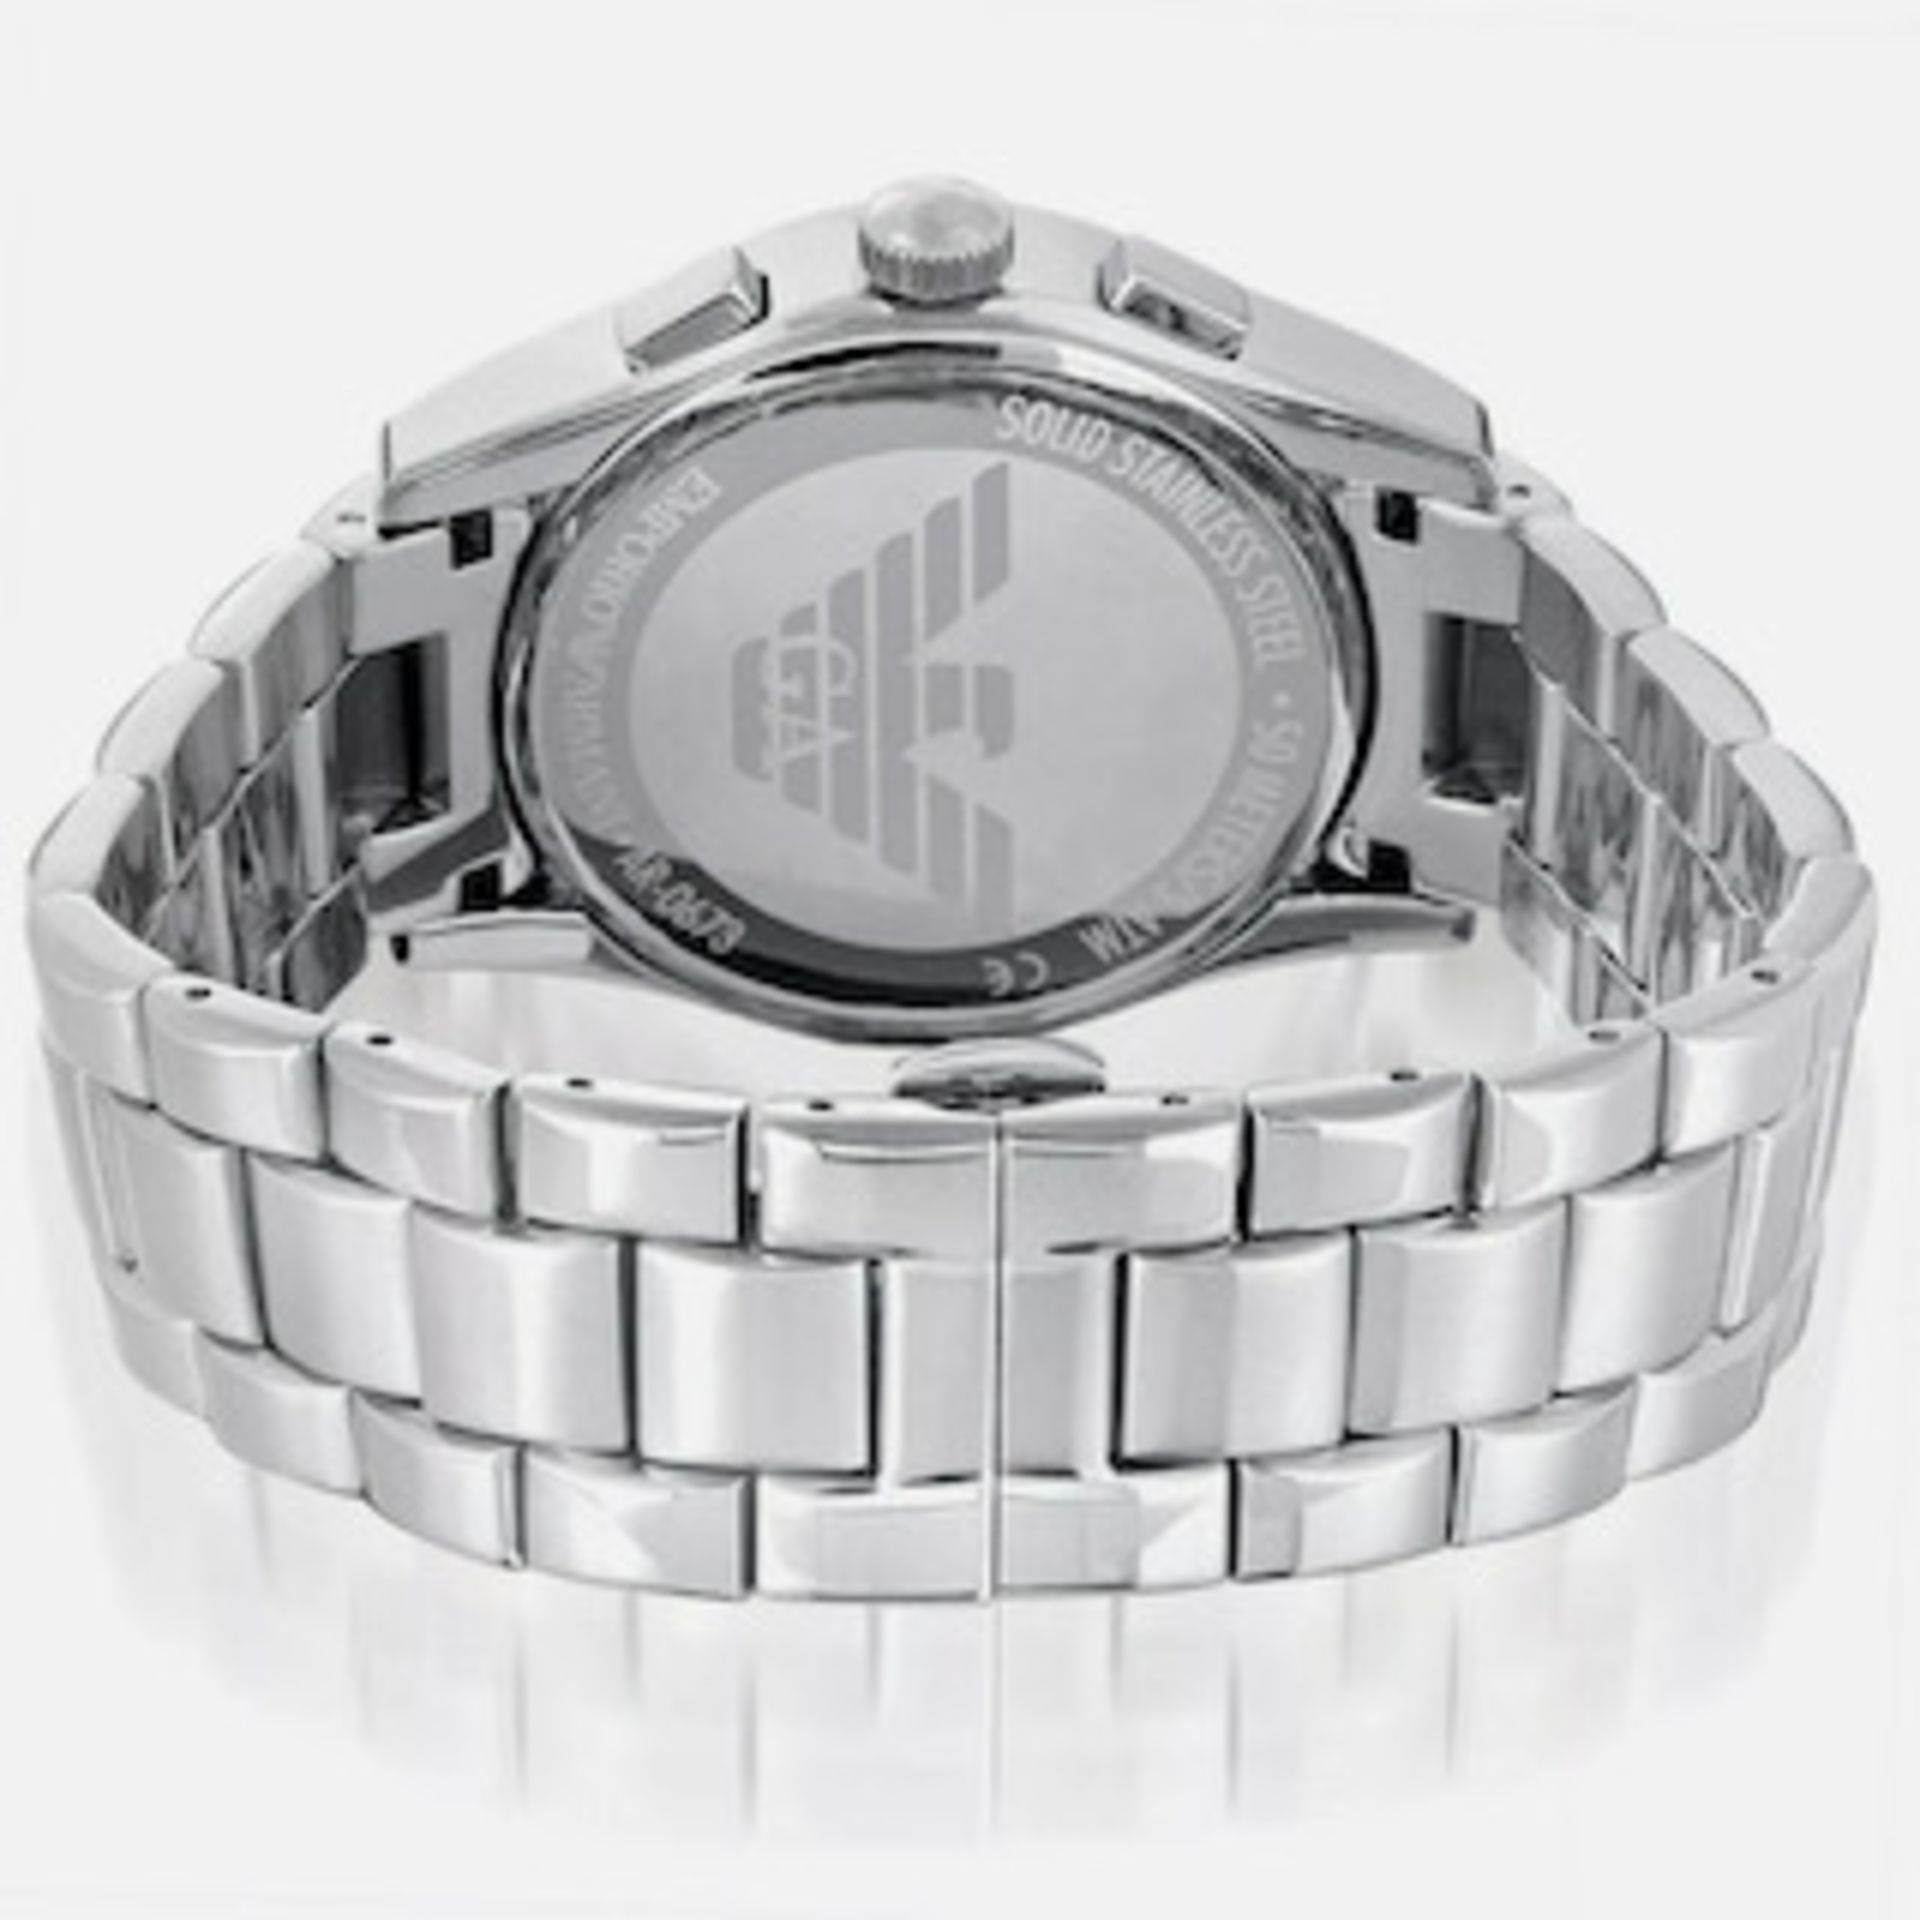 Emporio Armani AR0673 Men's Black Dial Silver Bracelet Quartz Chronograph Watch - Image 6 of 8